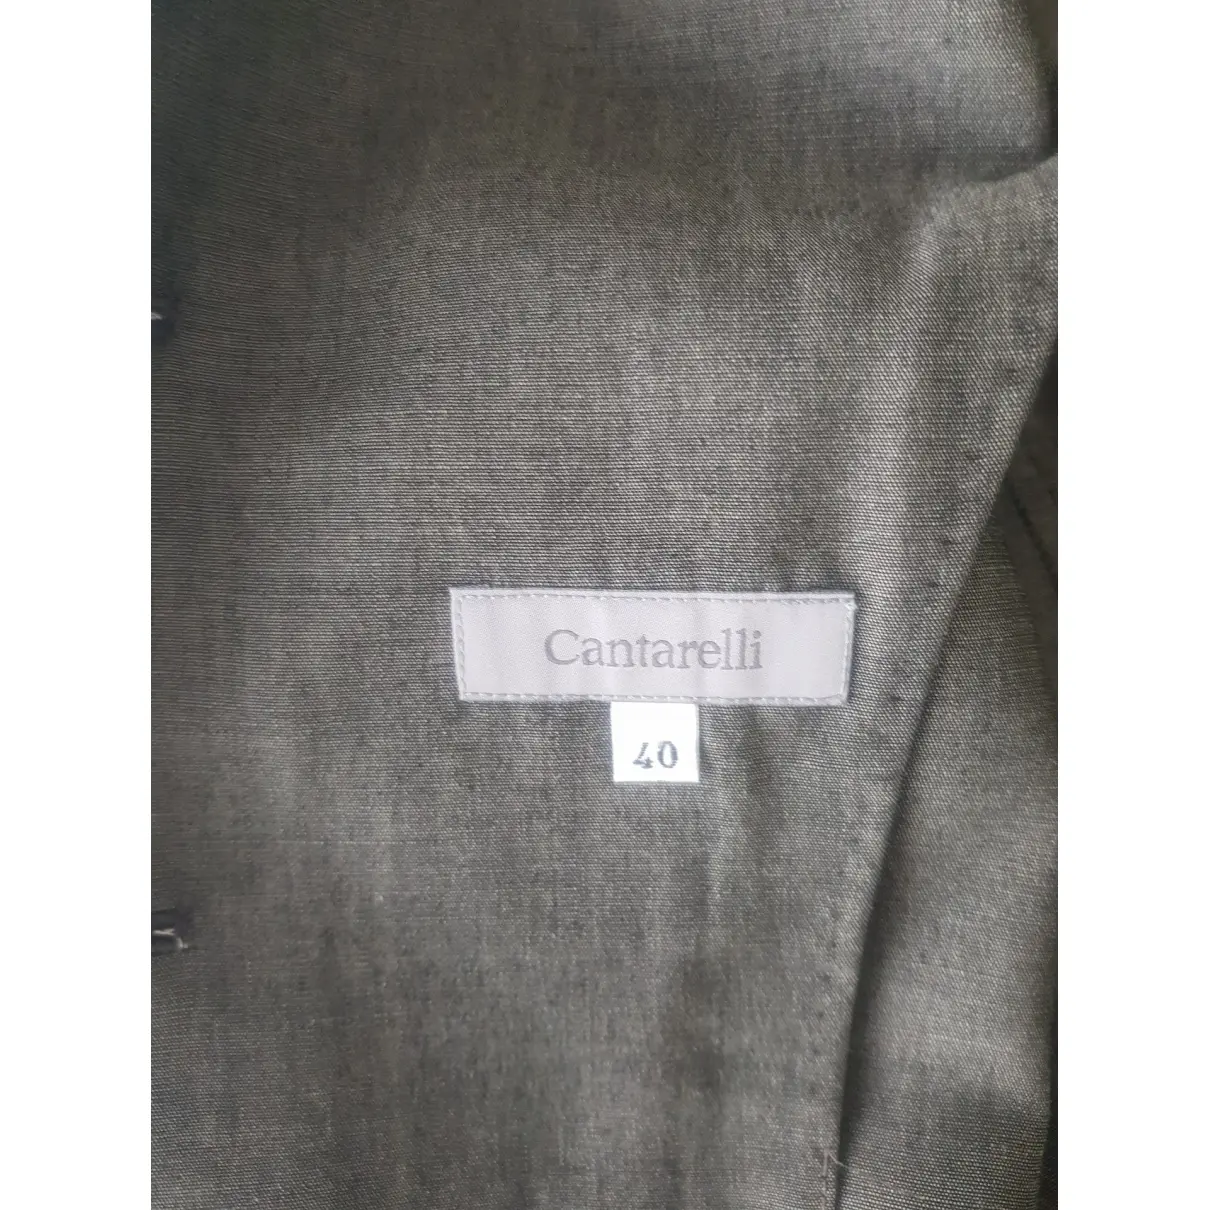 Buy Cantarelli Linen blazer online